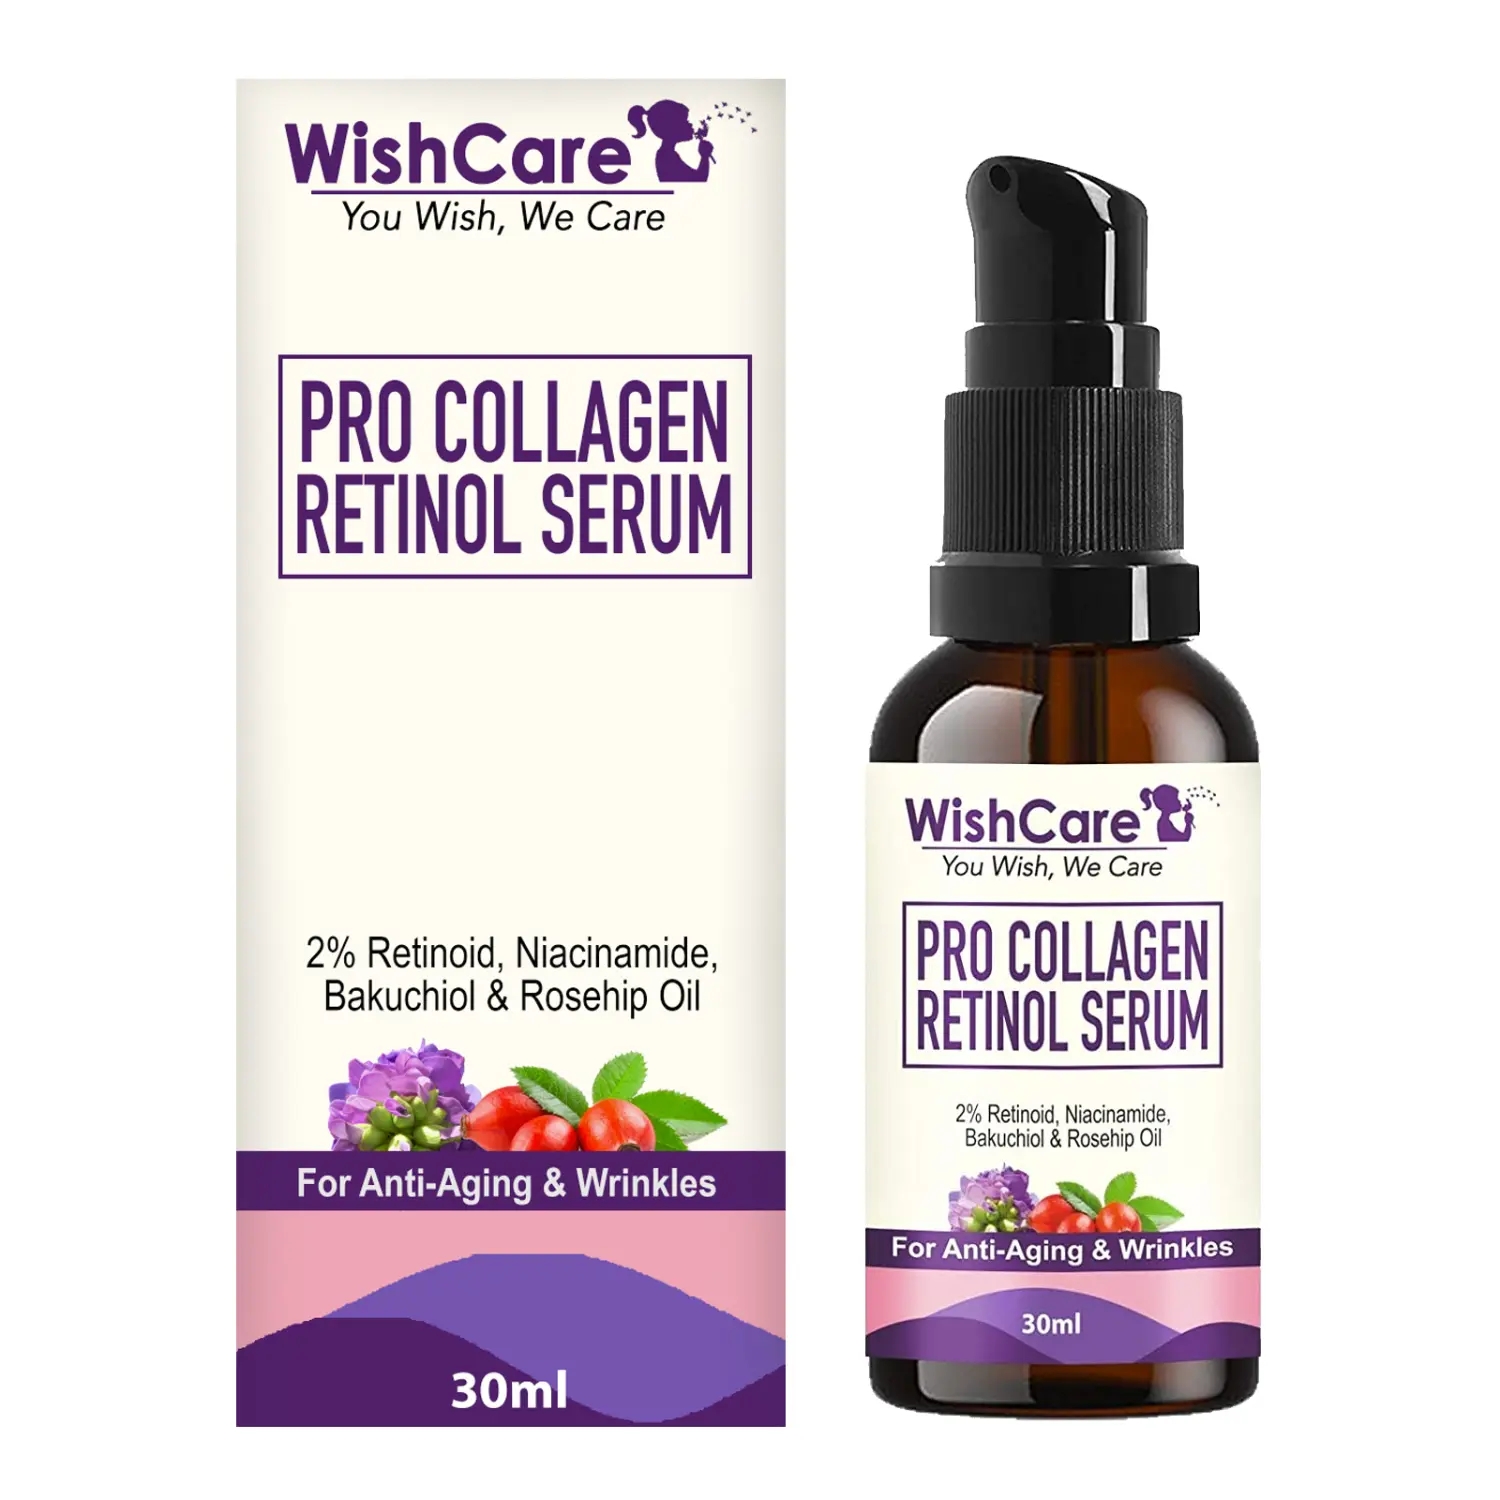 WishCare Pro Collagen Retinol Serum (30ml)